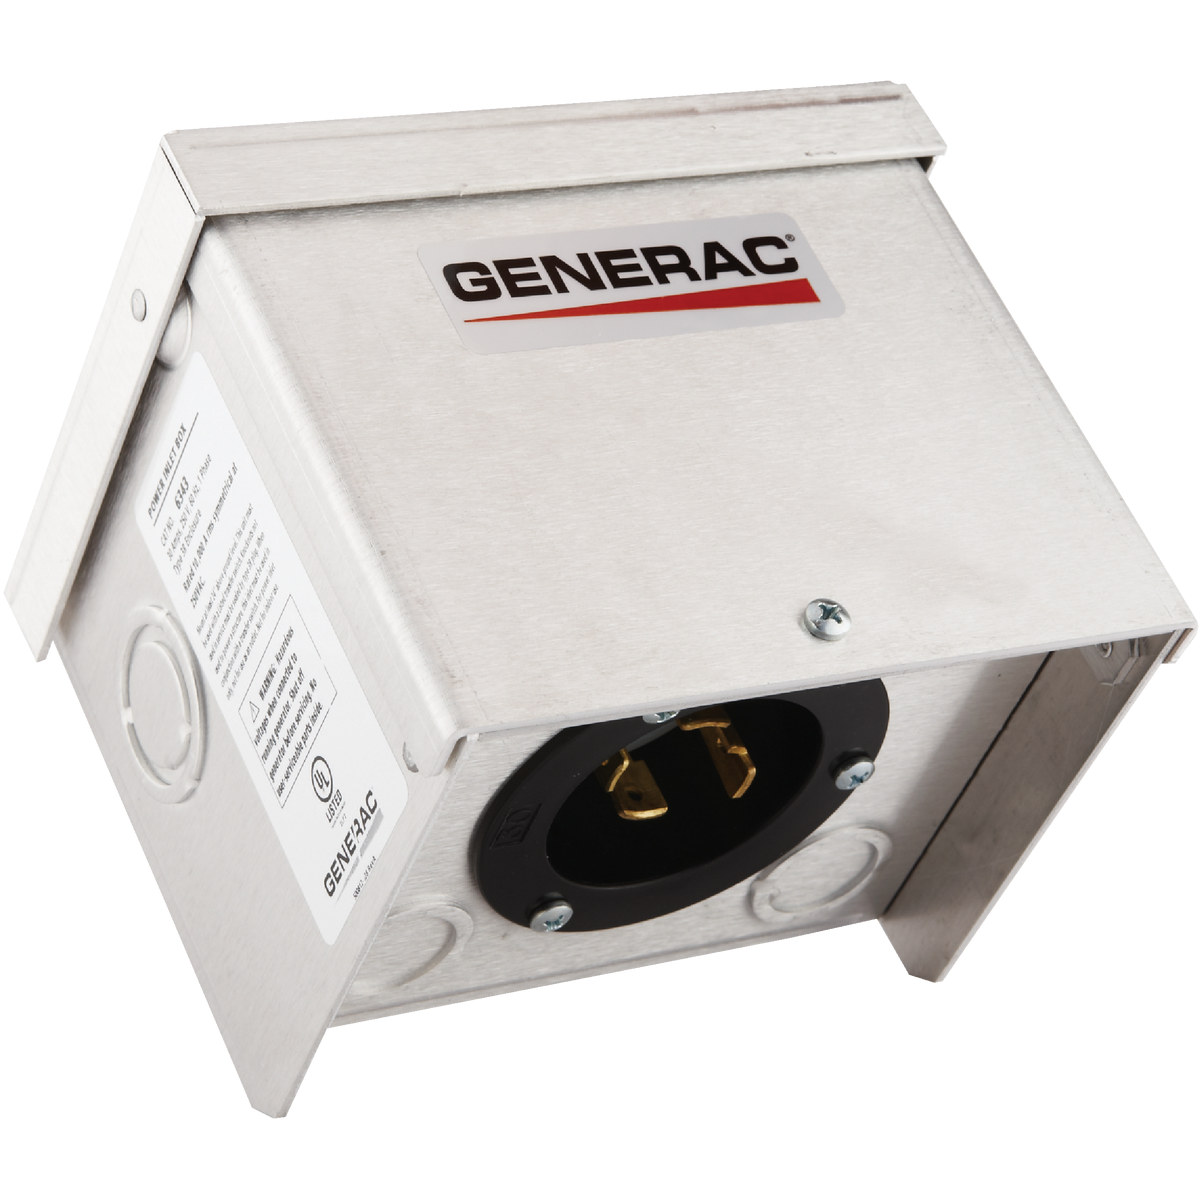 Generator Power Inlet Box